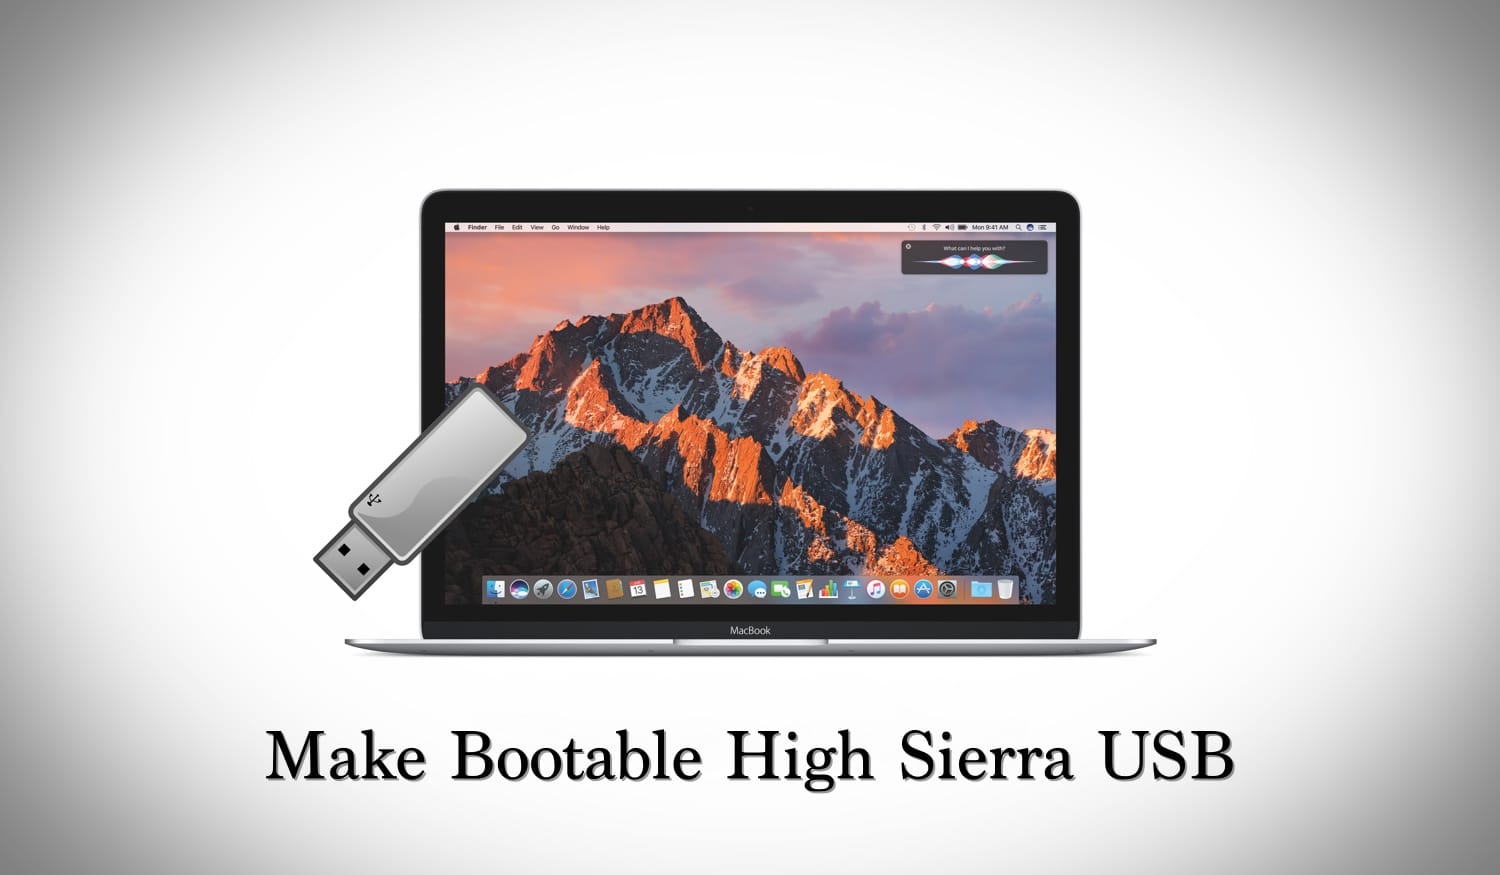 mac high sierra download dmg